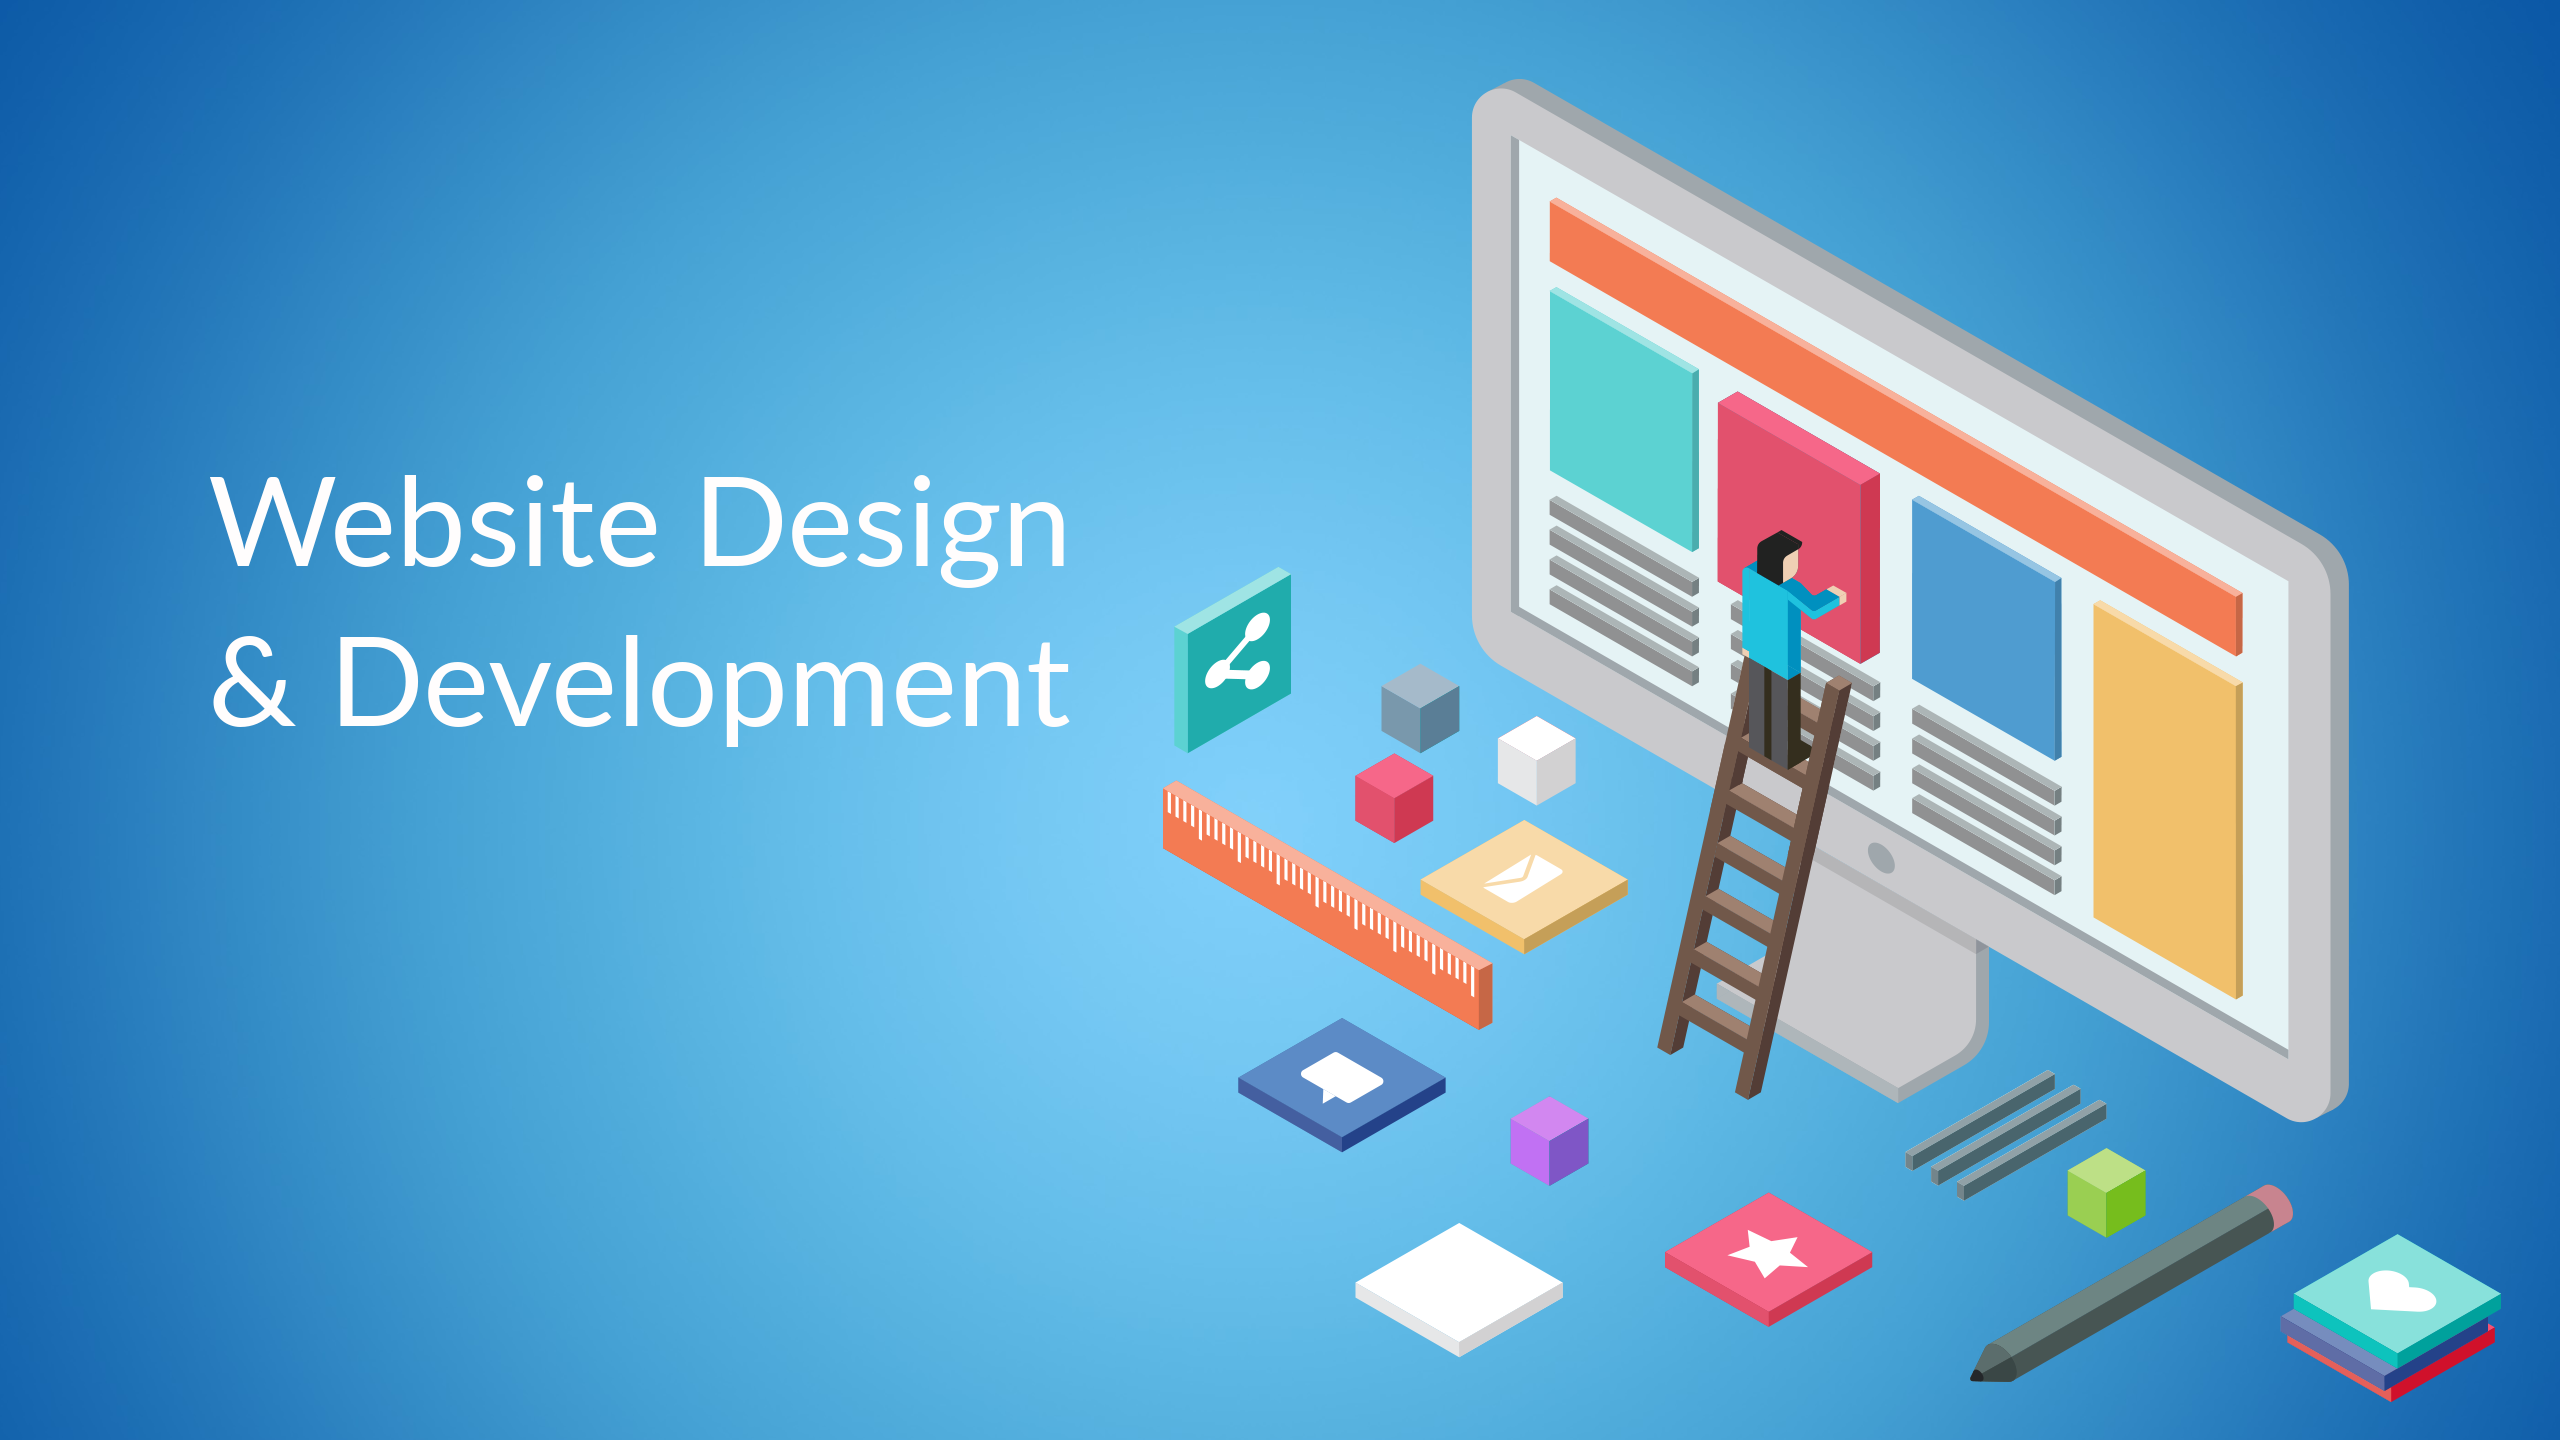 Website Design and Development services in Australia